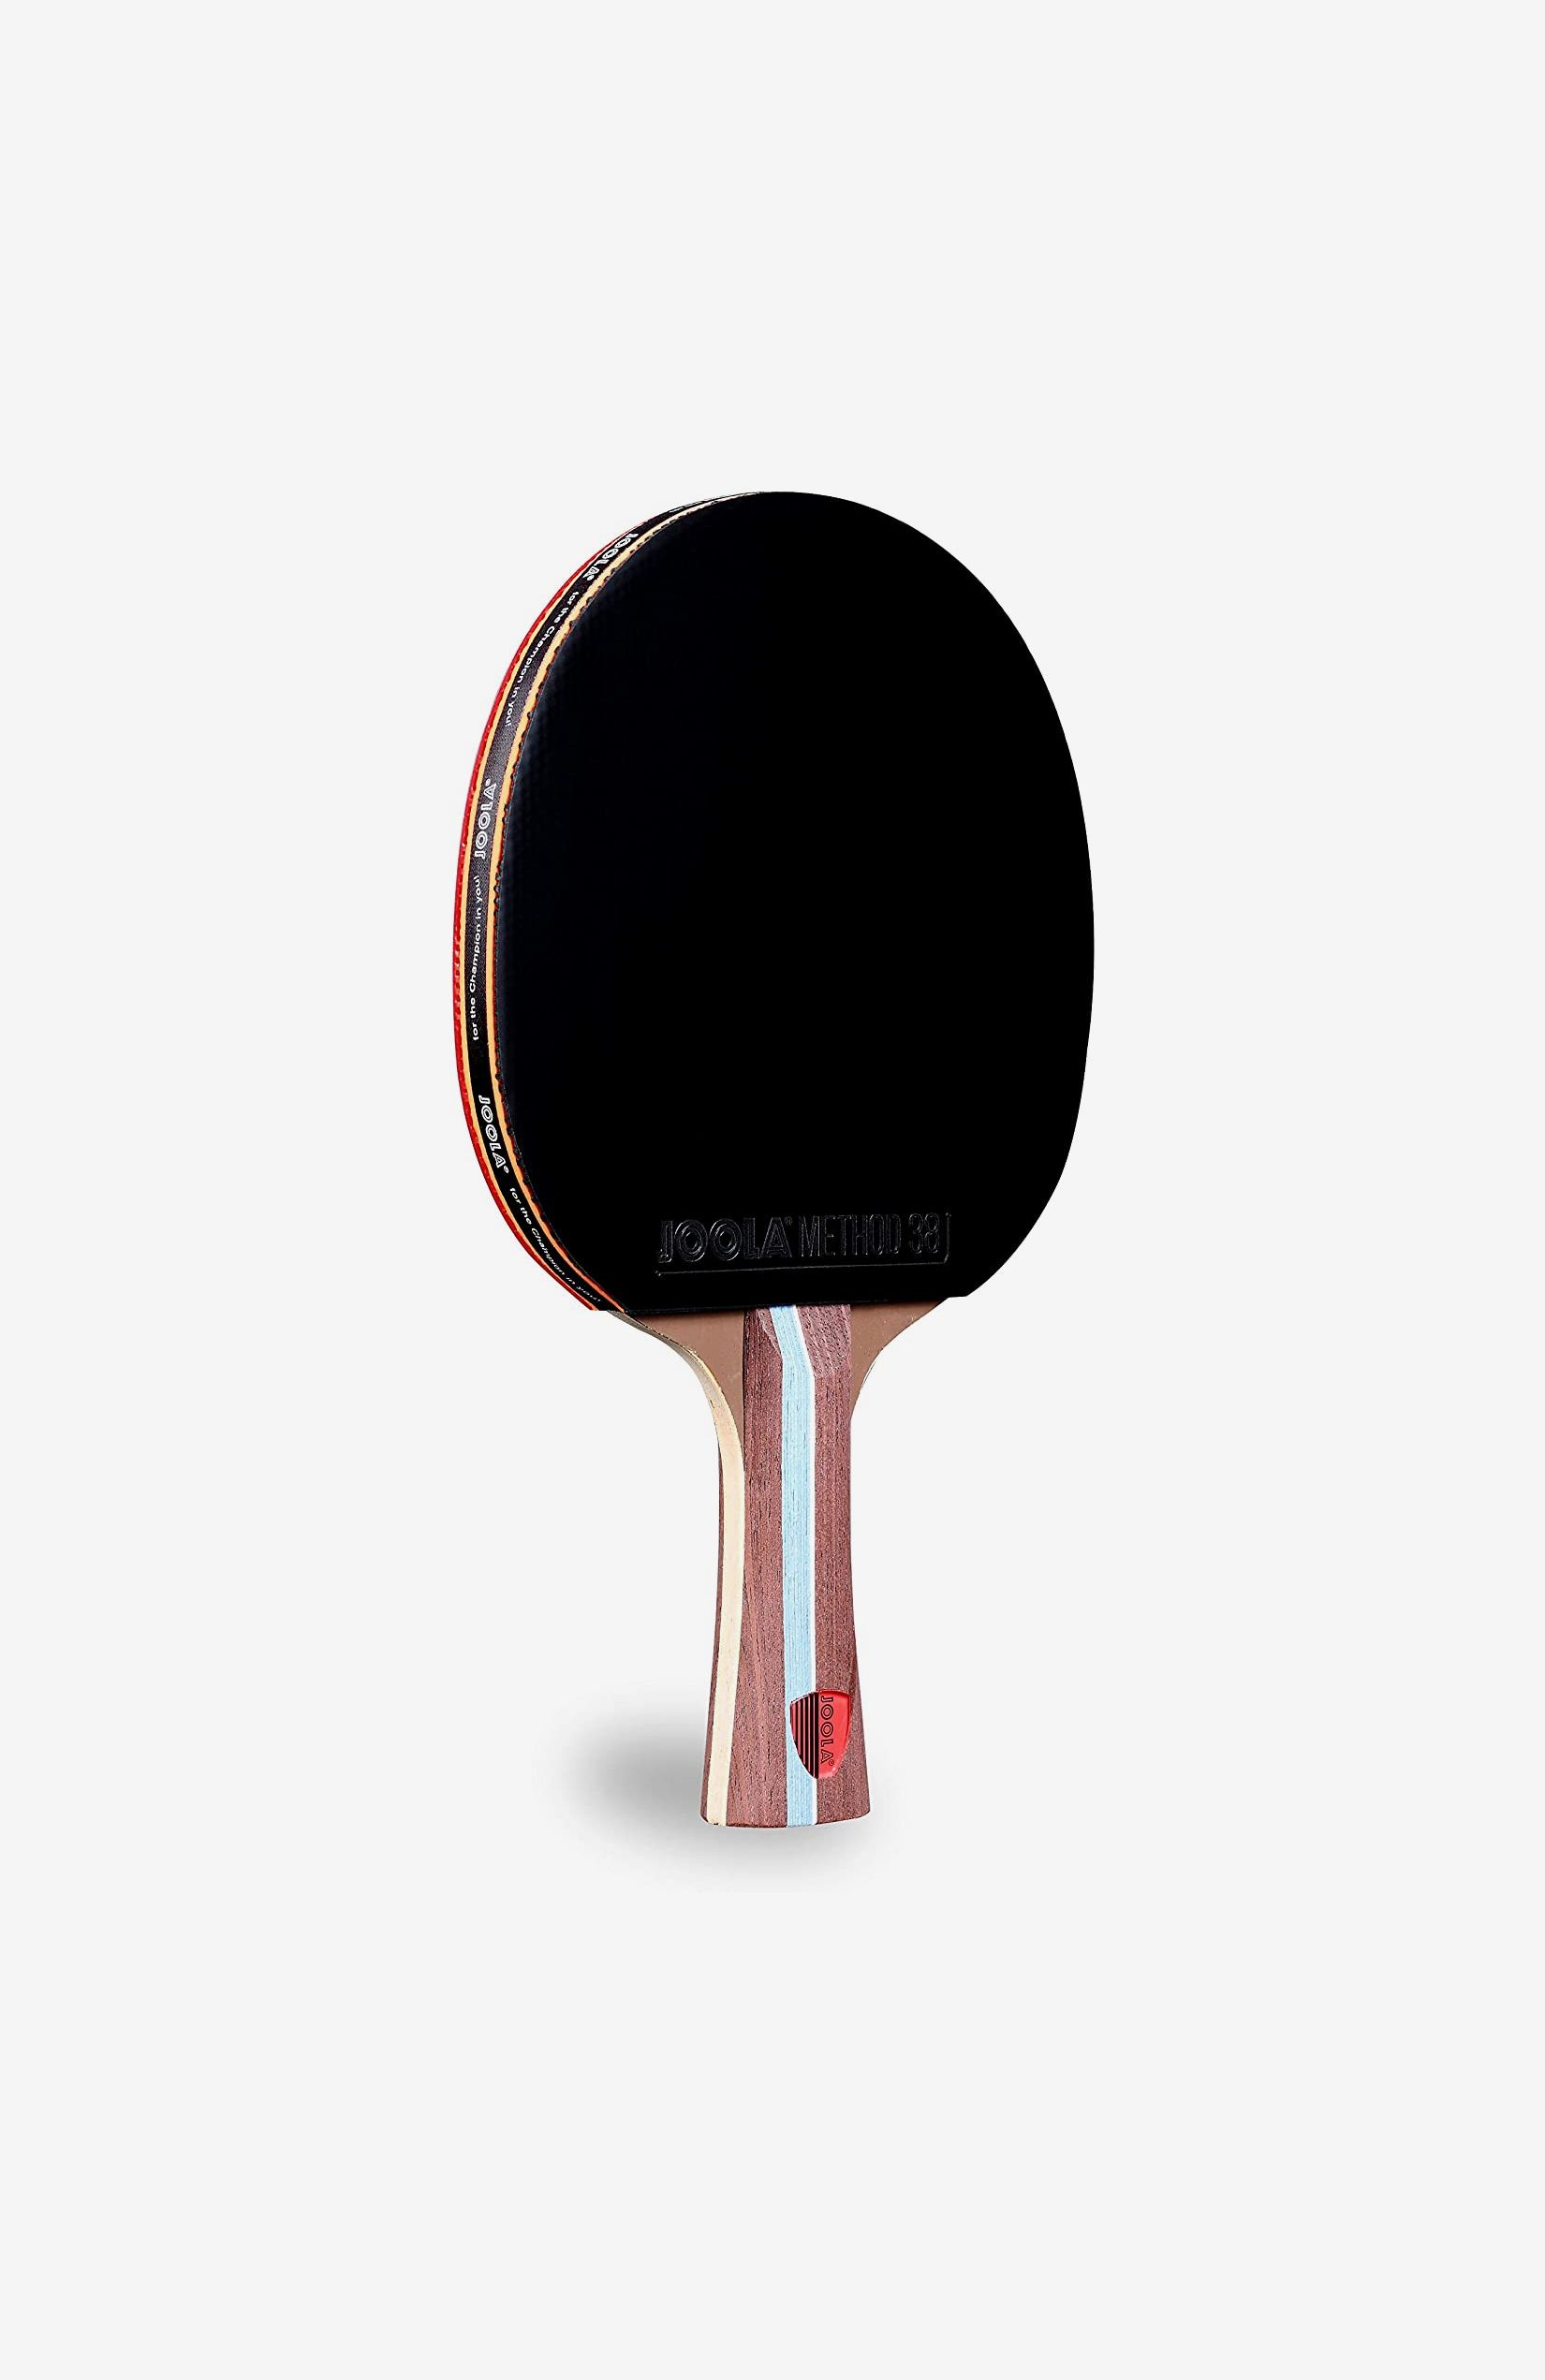 NEW BOER Pro Carbon Premium Ping Pong Table Tennis Paddle Racket Tournament 2020 